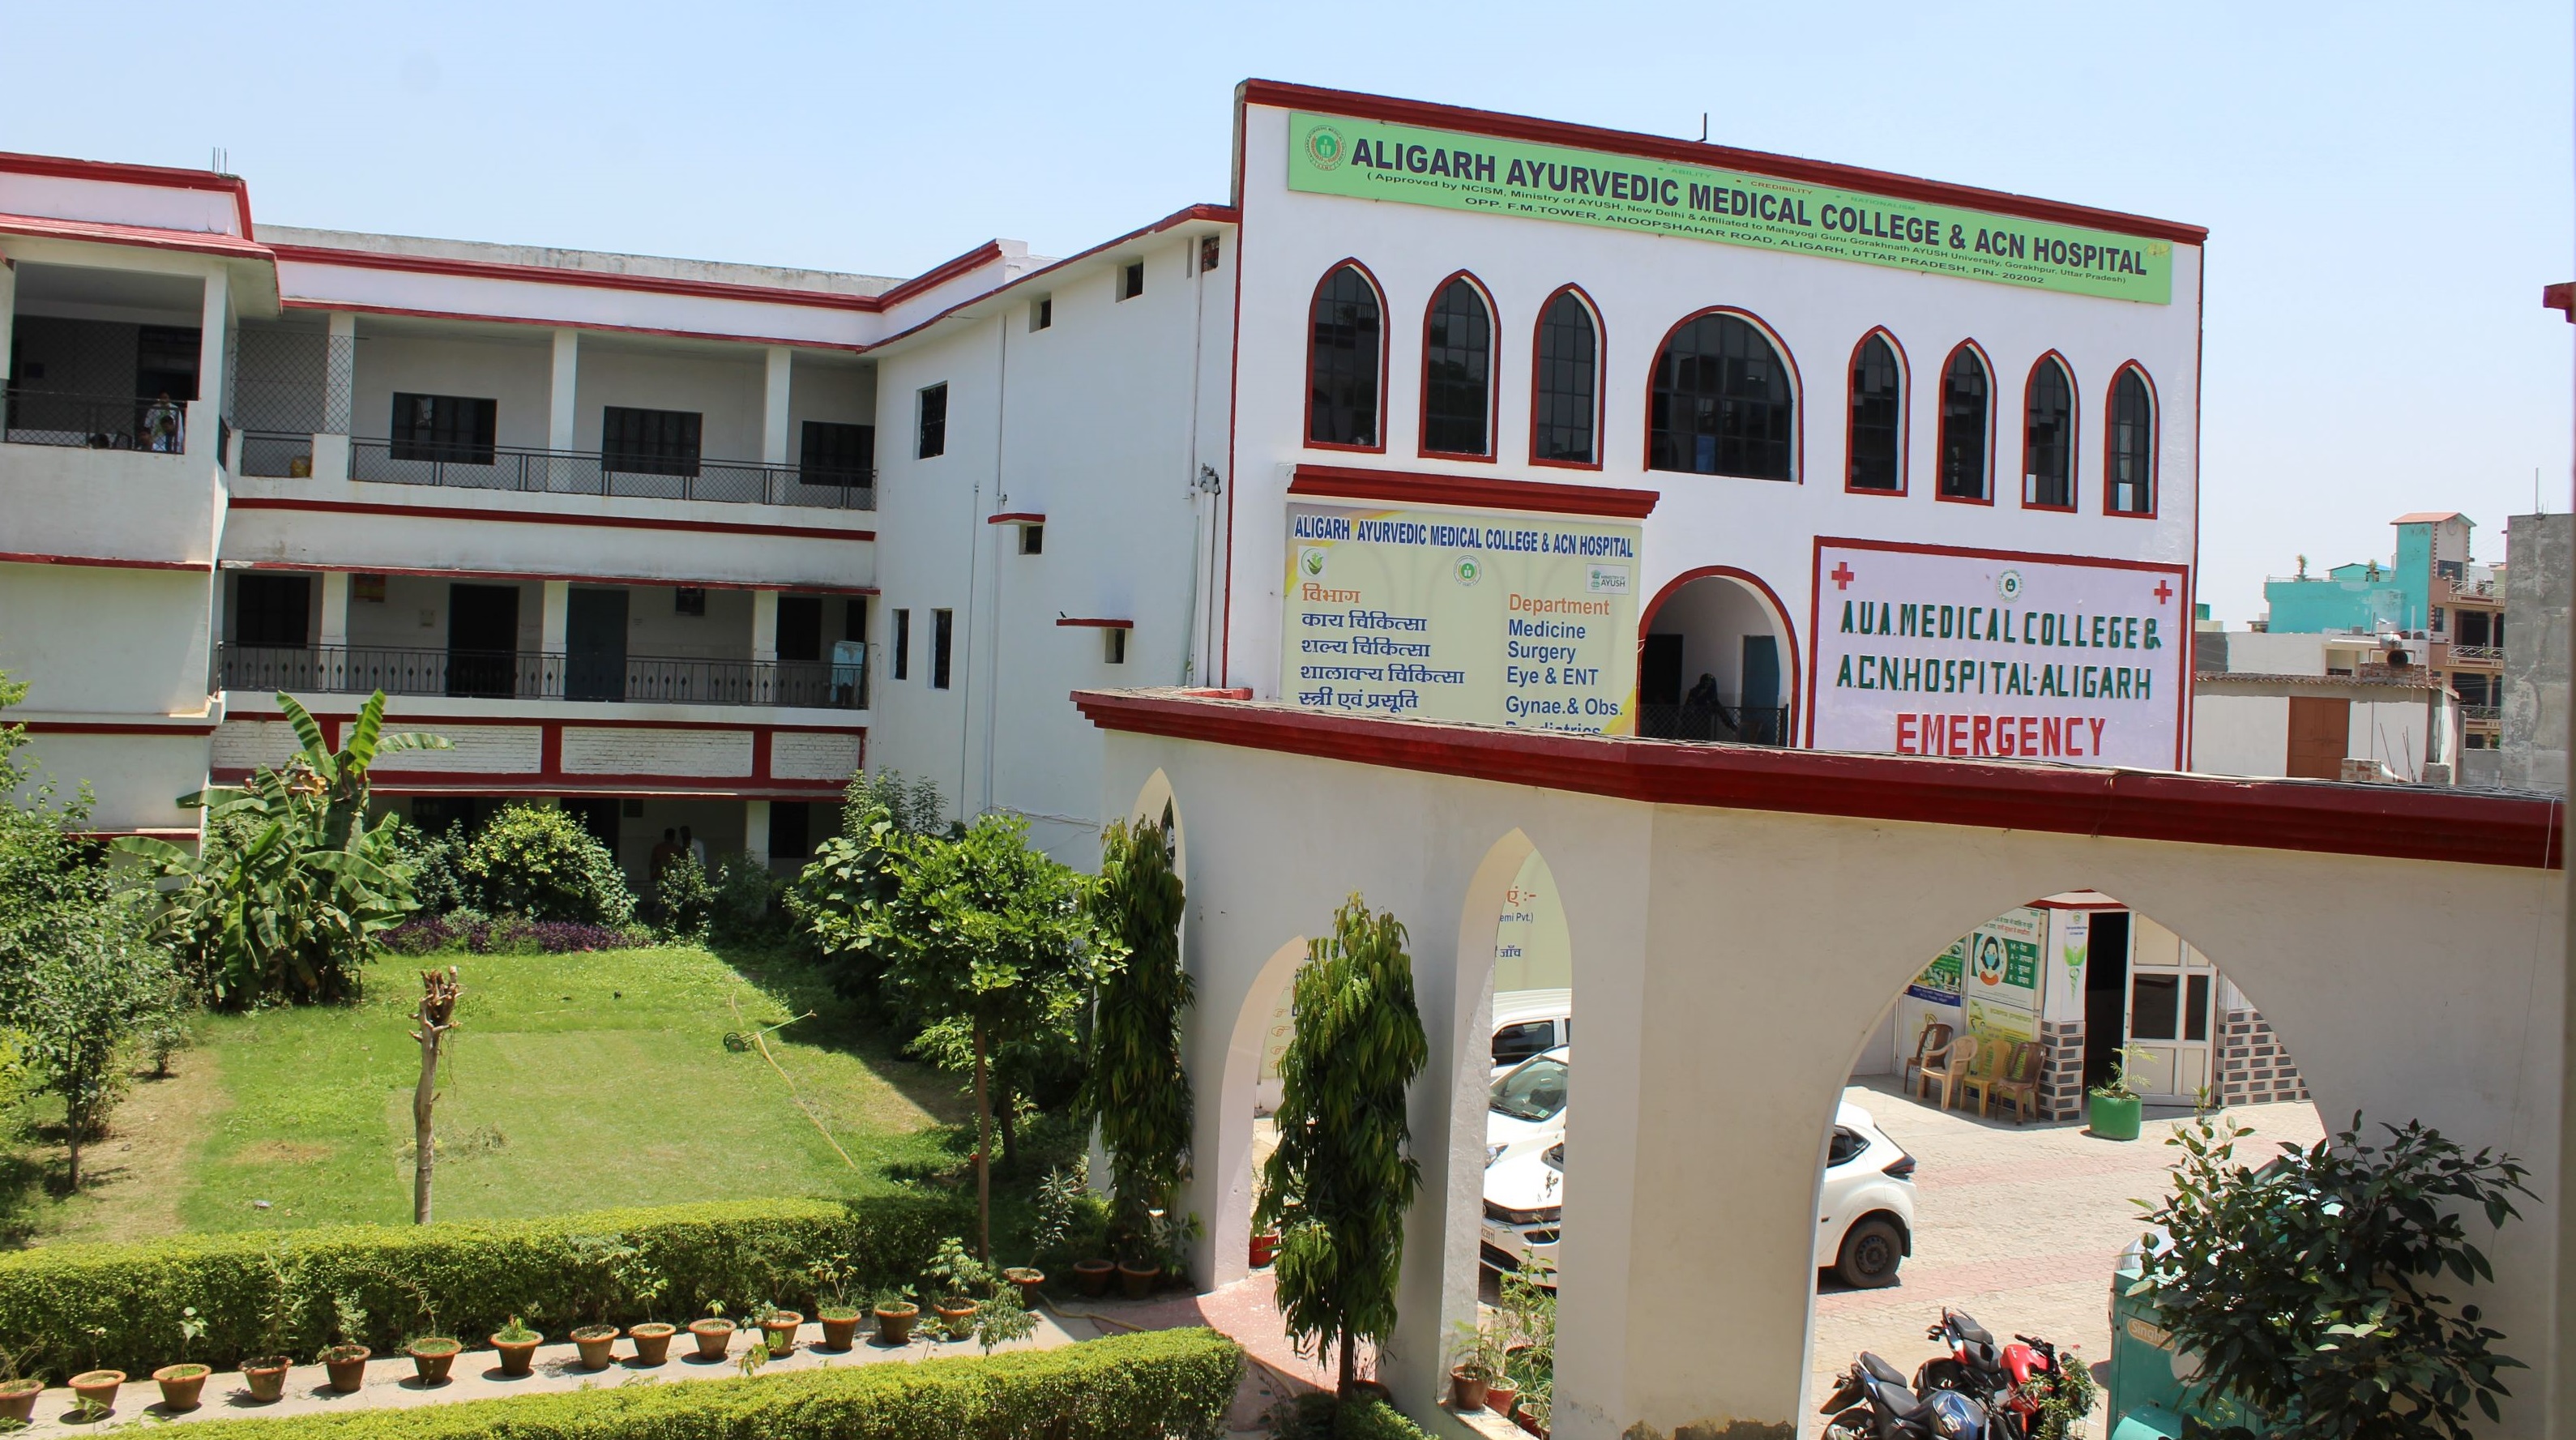 Aligarh Ayurvedic Medical College